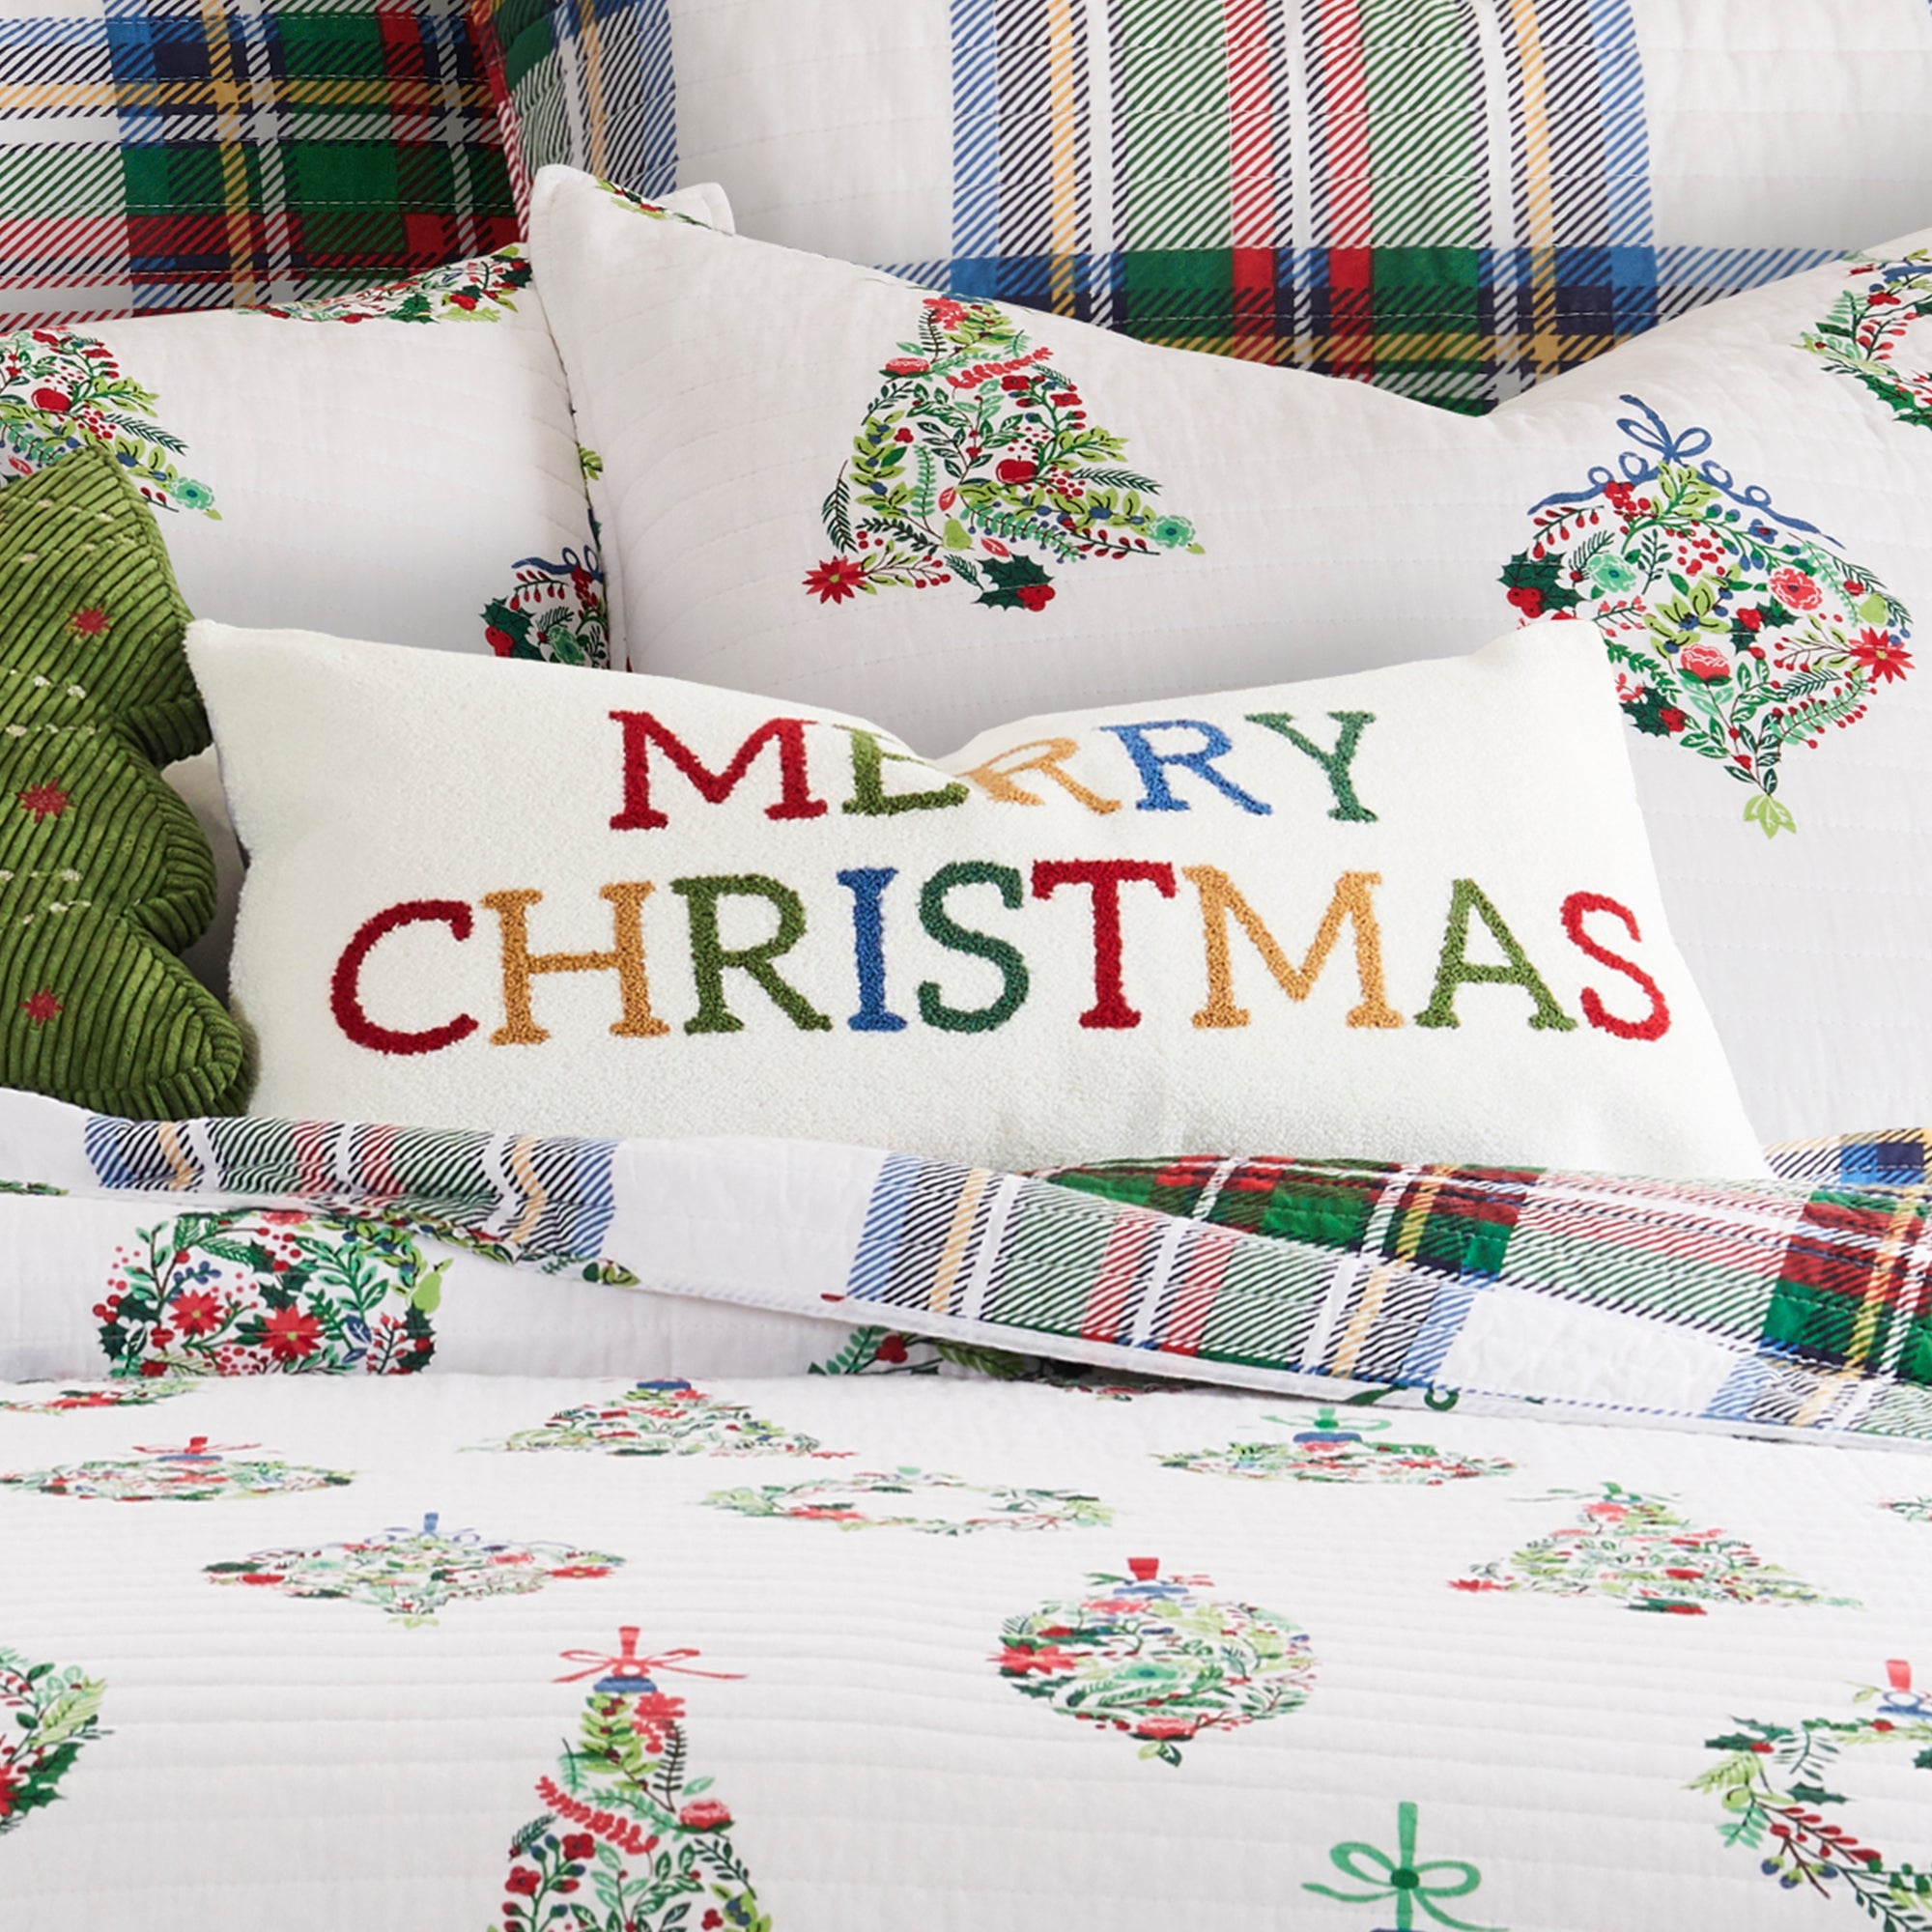 Festive Baubles Merry Christmas Pillow